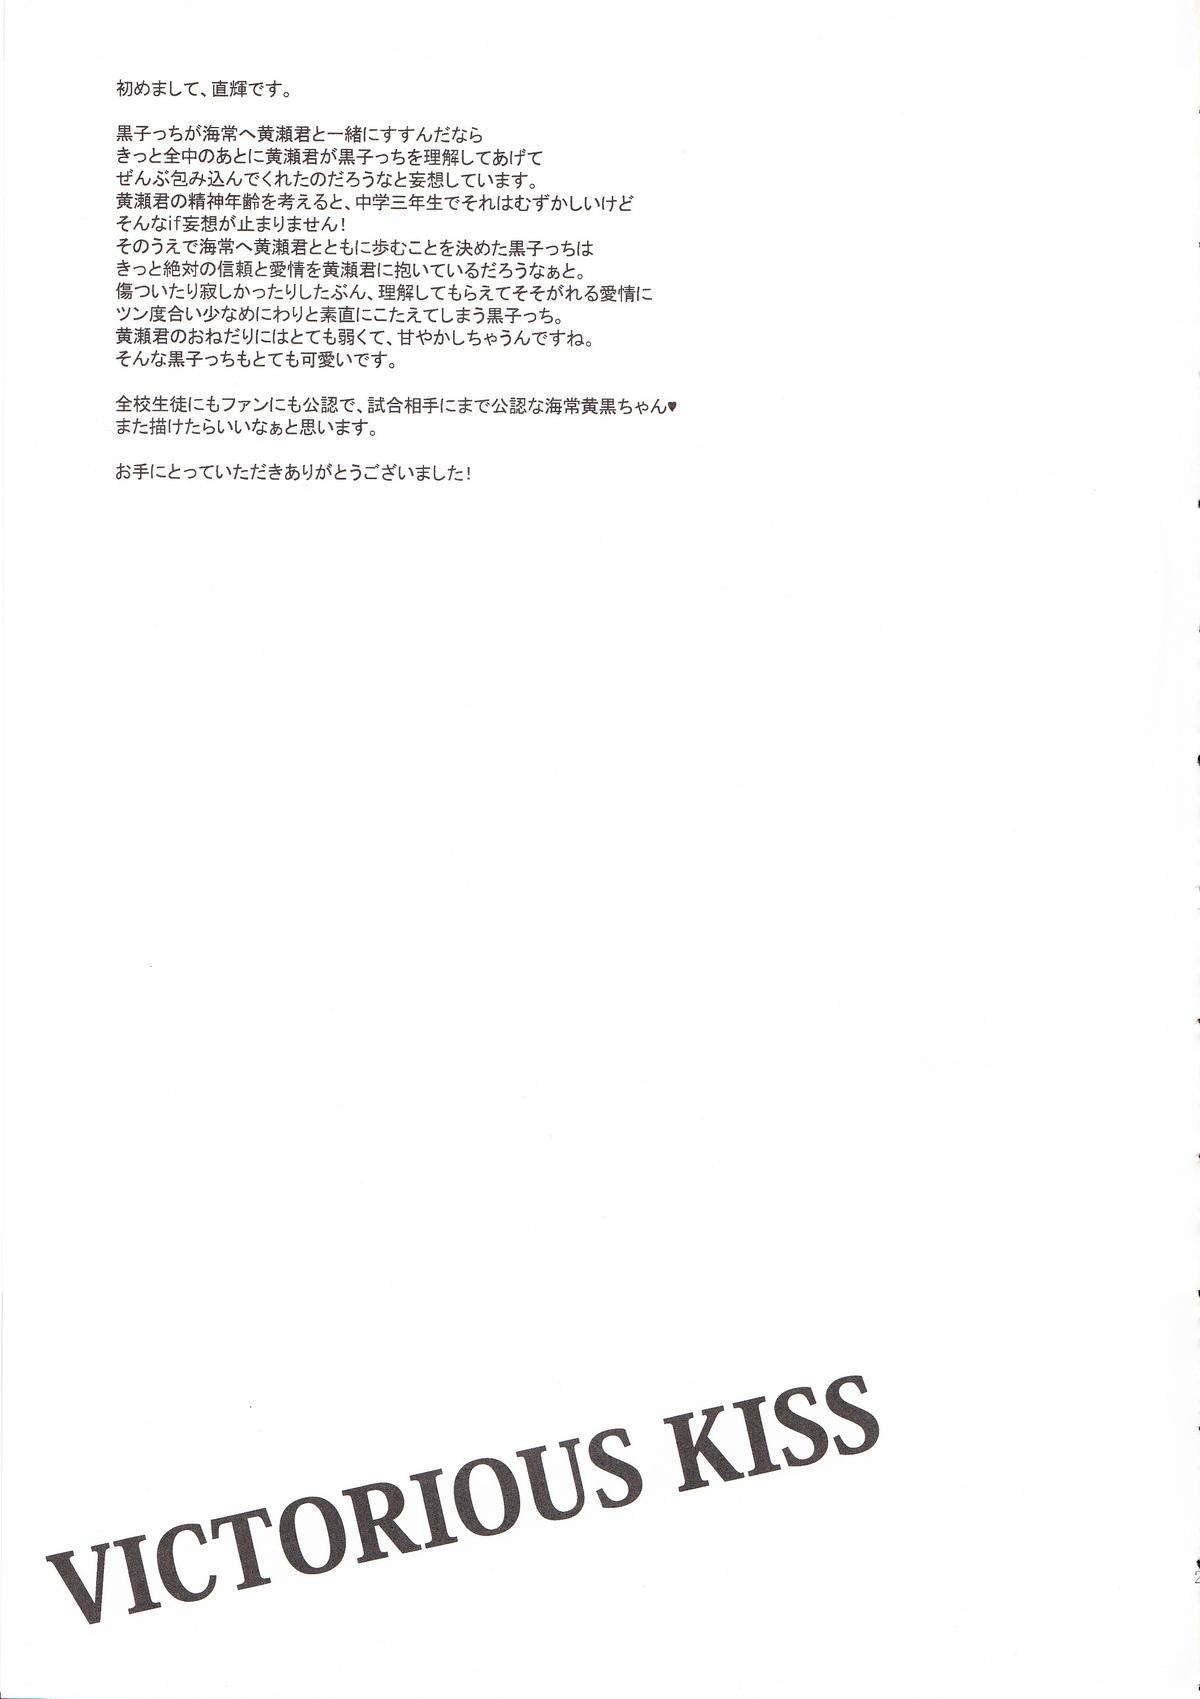 Ghetto VICTORIOUS KISS - Kuroko no basuke Handjobs - Page 23